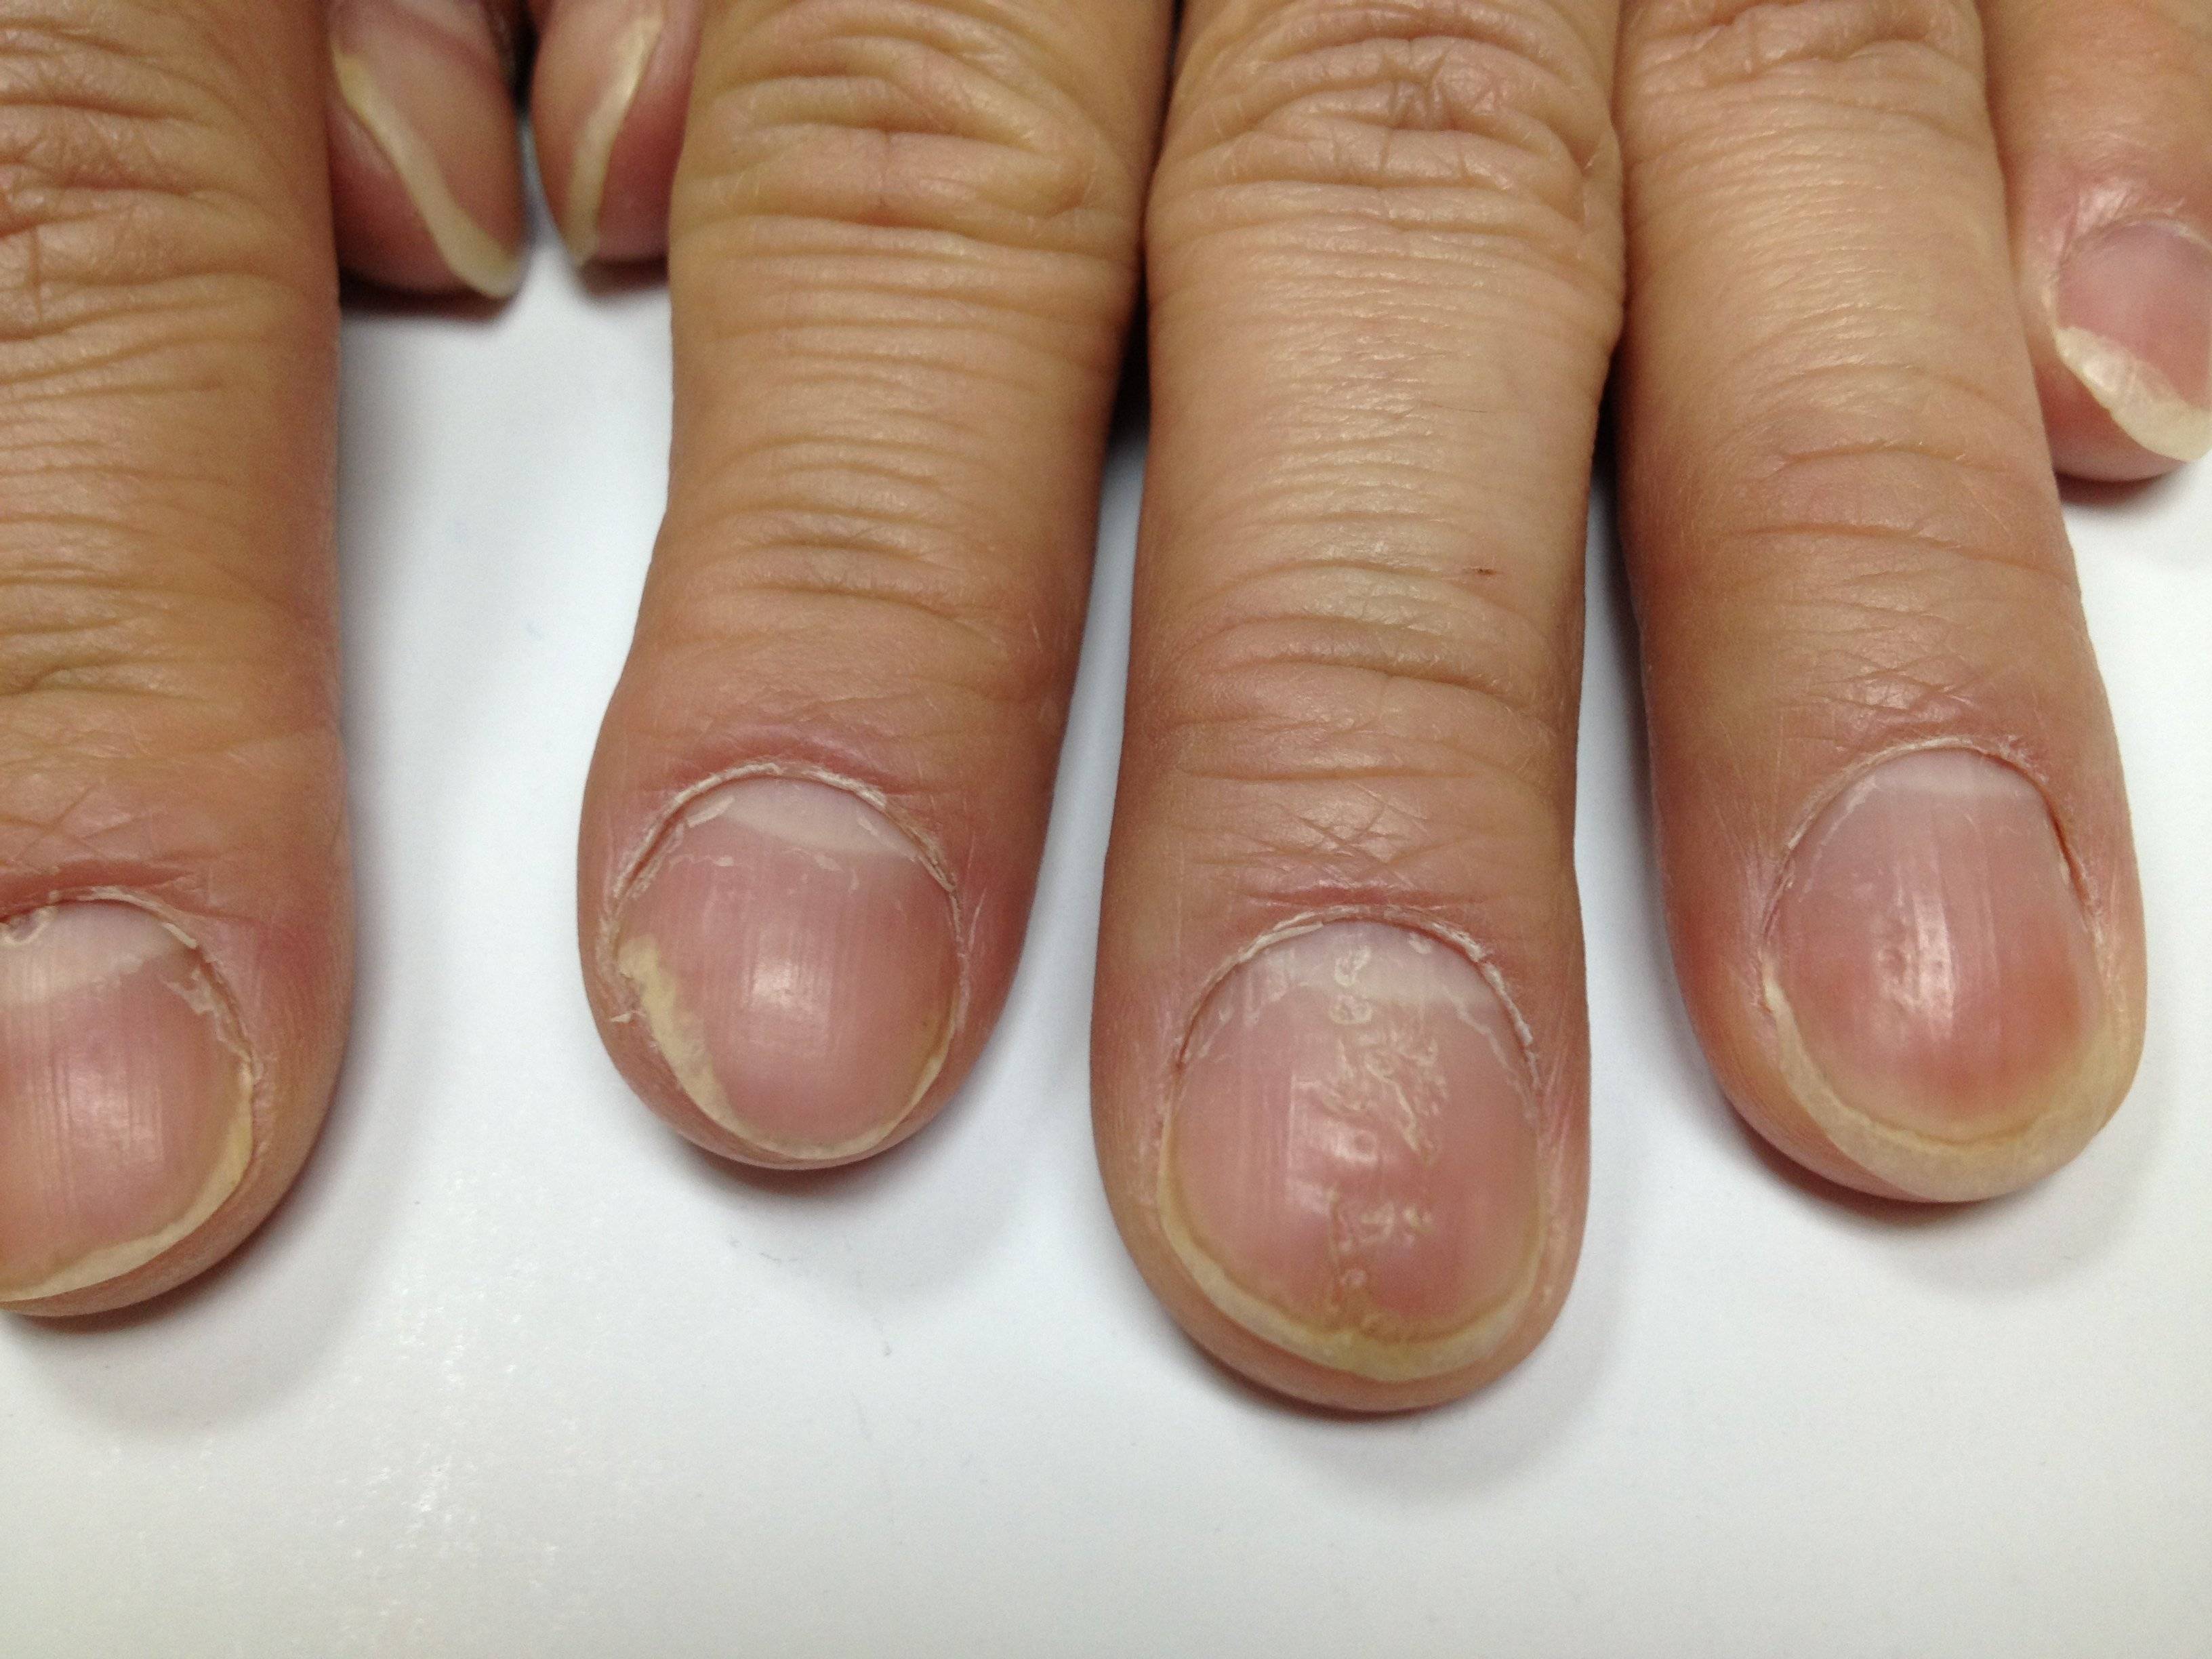 Псориаз ногтей: фото и видео болезни, лечение и профилактика заболевания